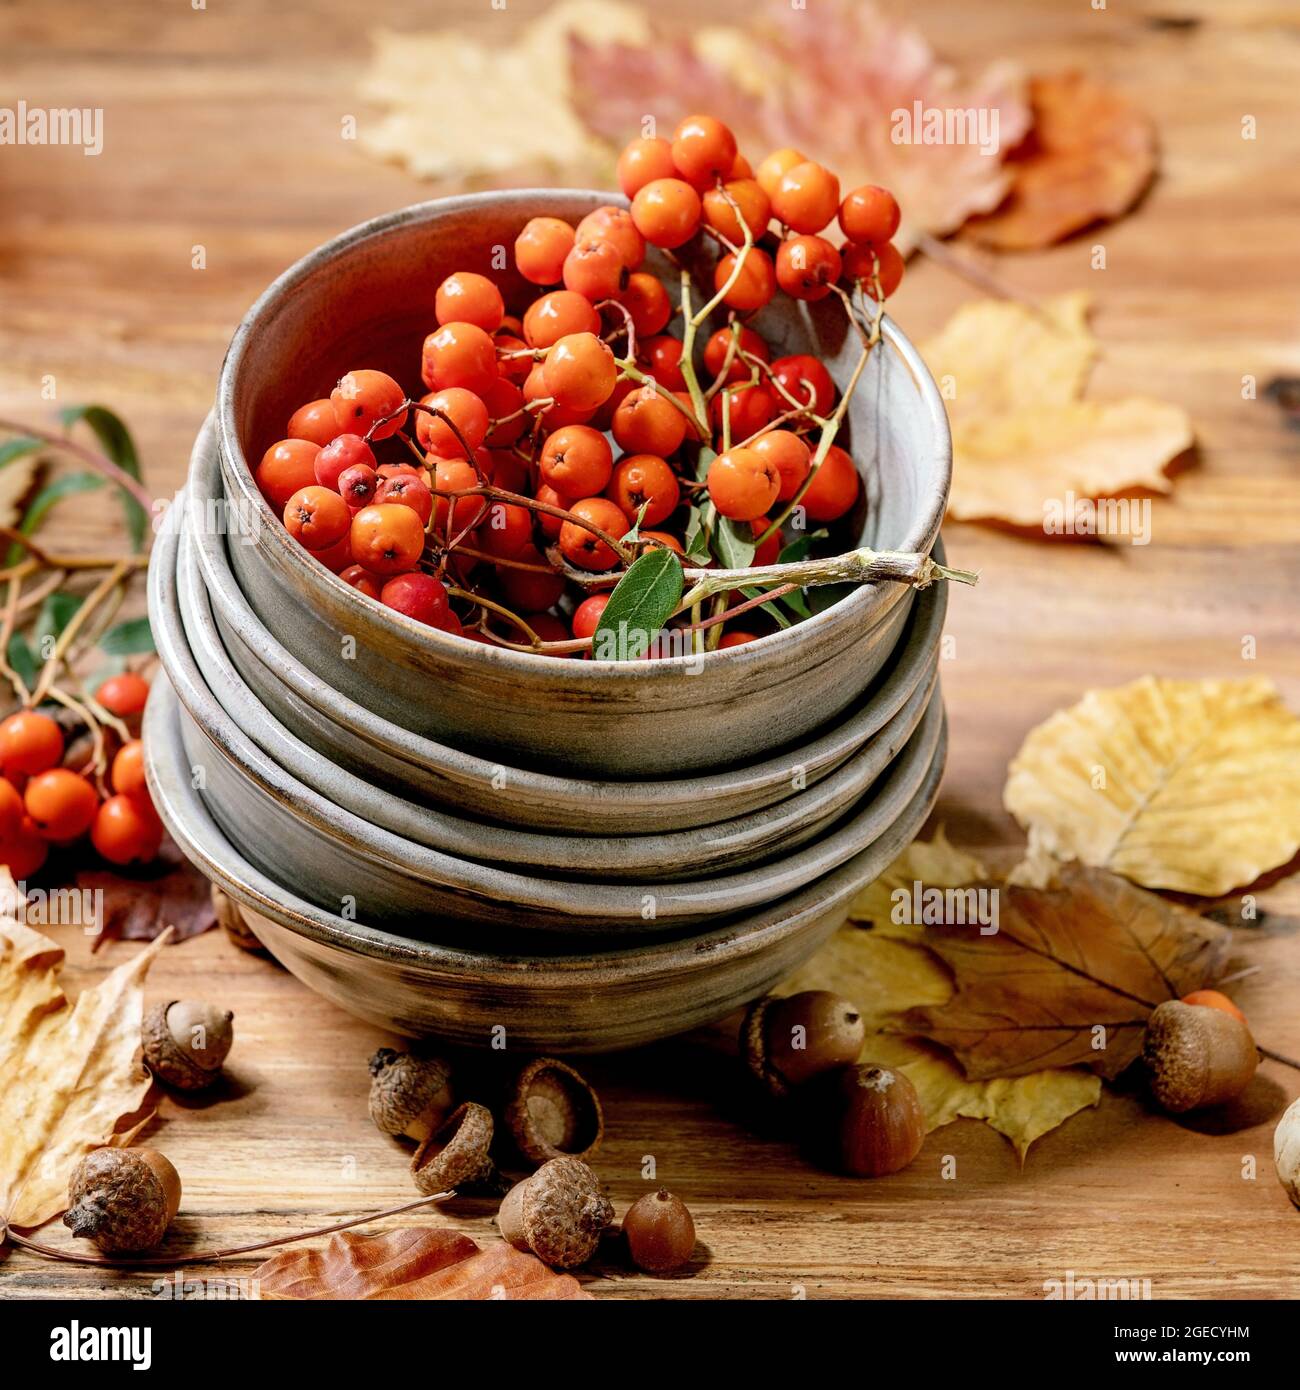 Autumn seasonal background Stock Photo